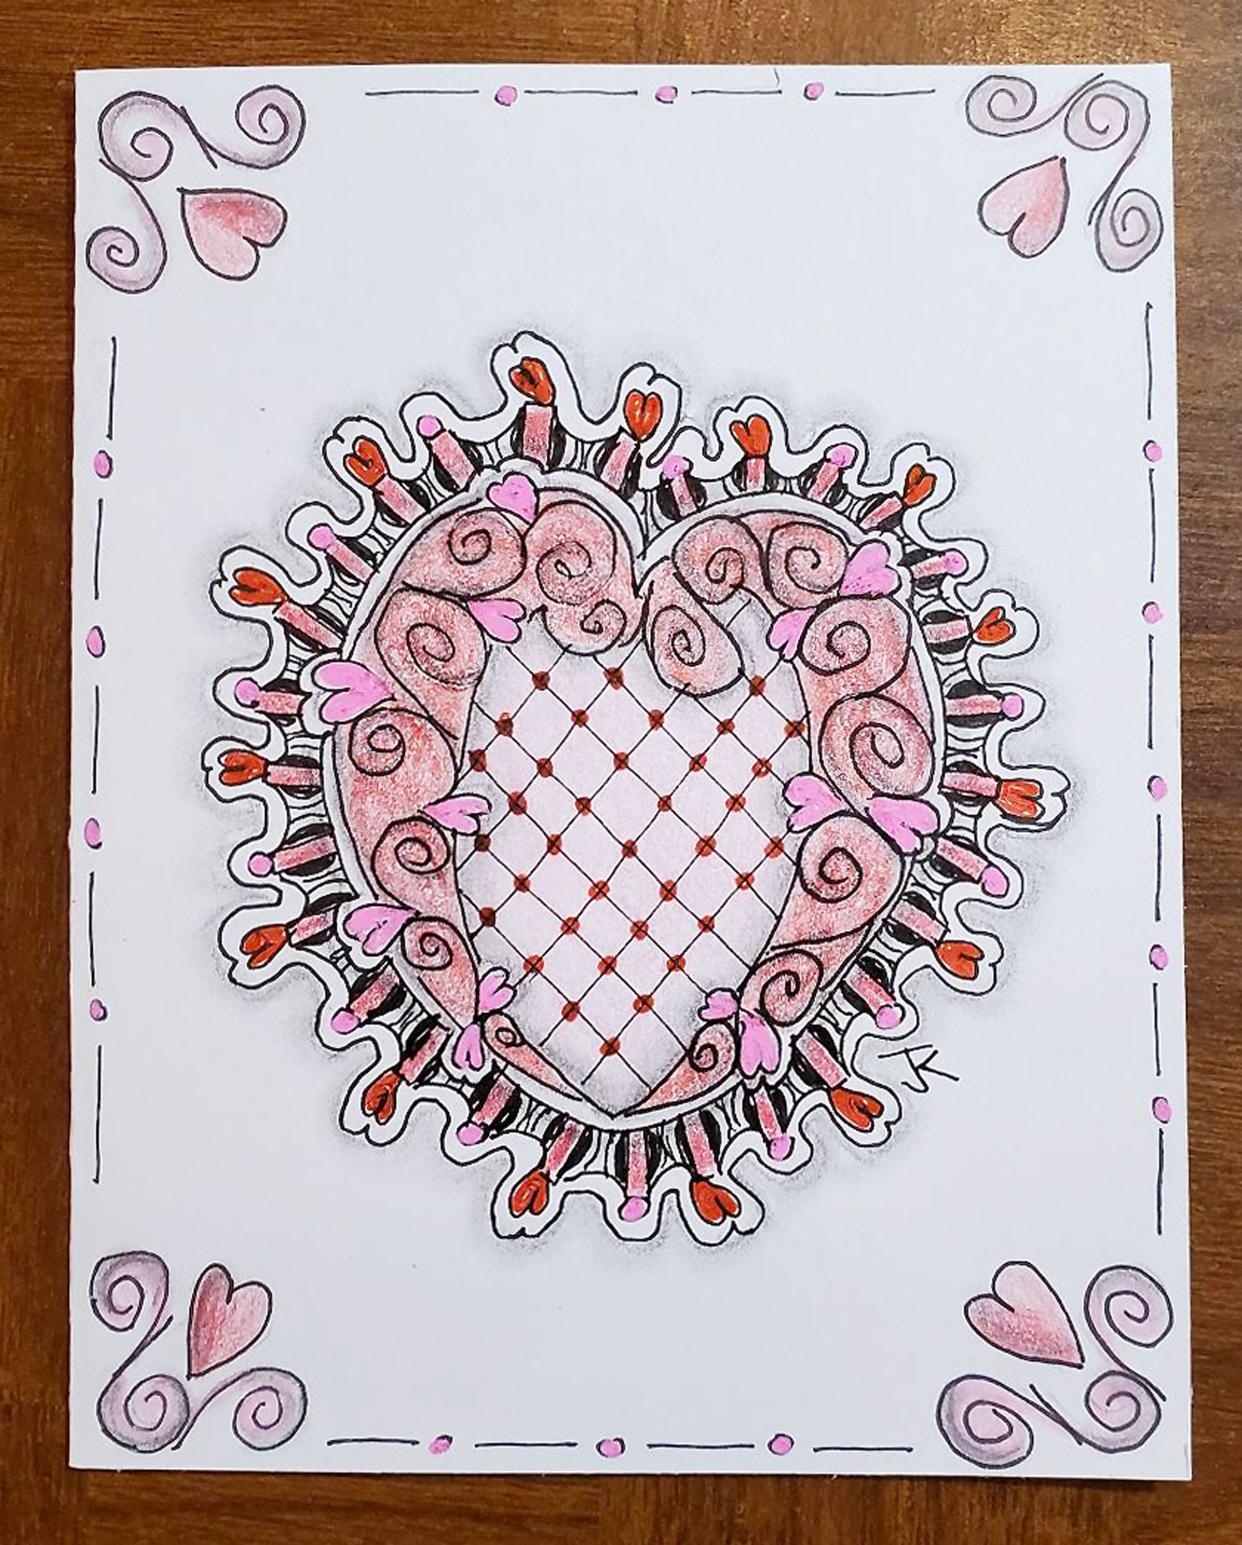 Janet Kilgus created this valentine using the Zentangle Method.